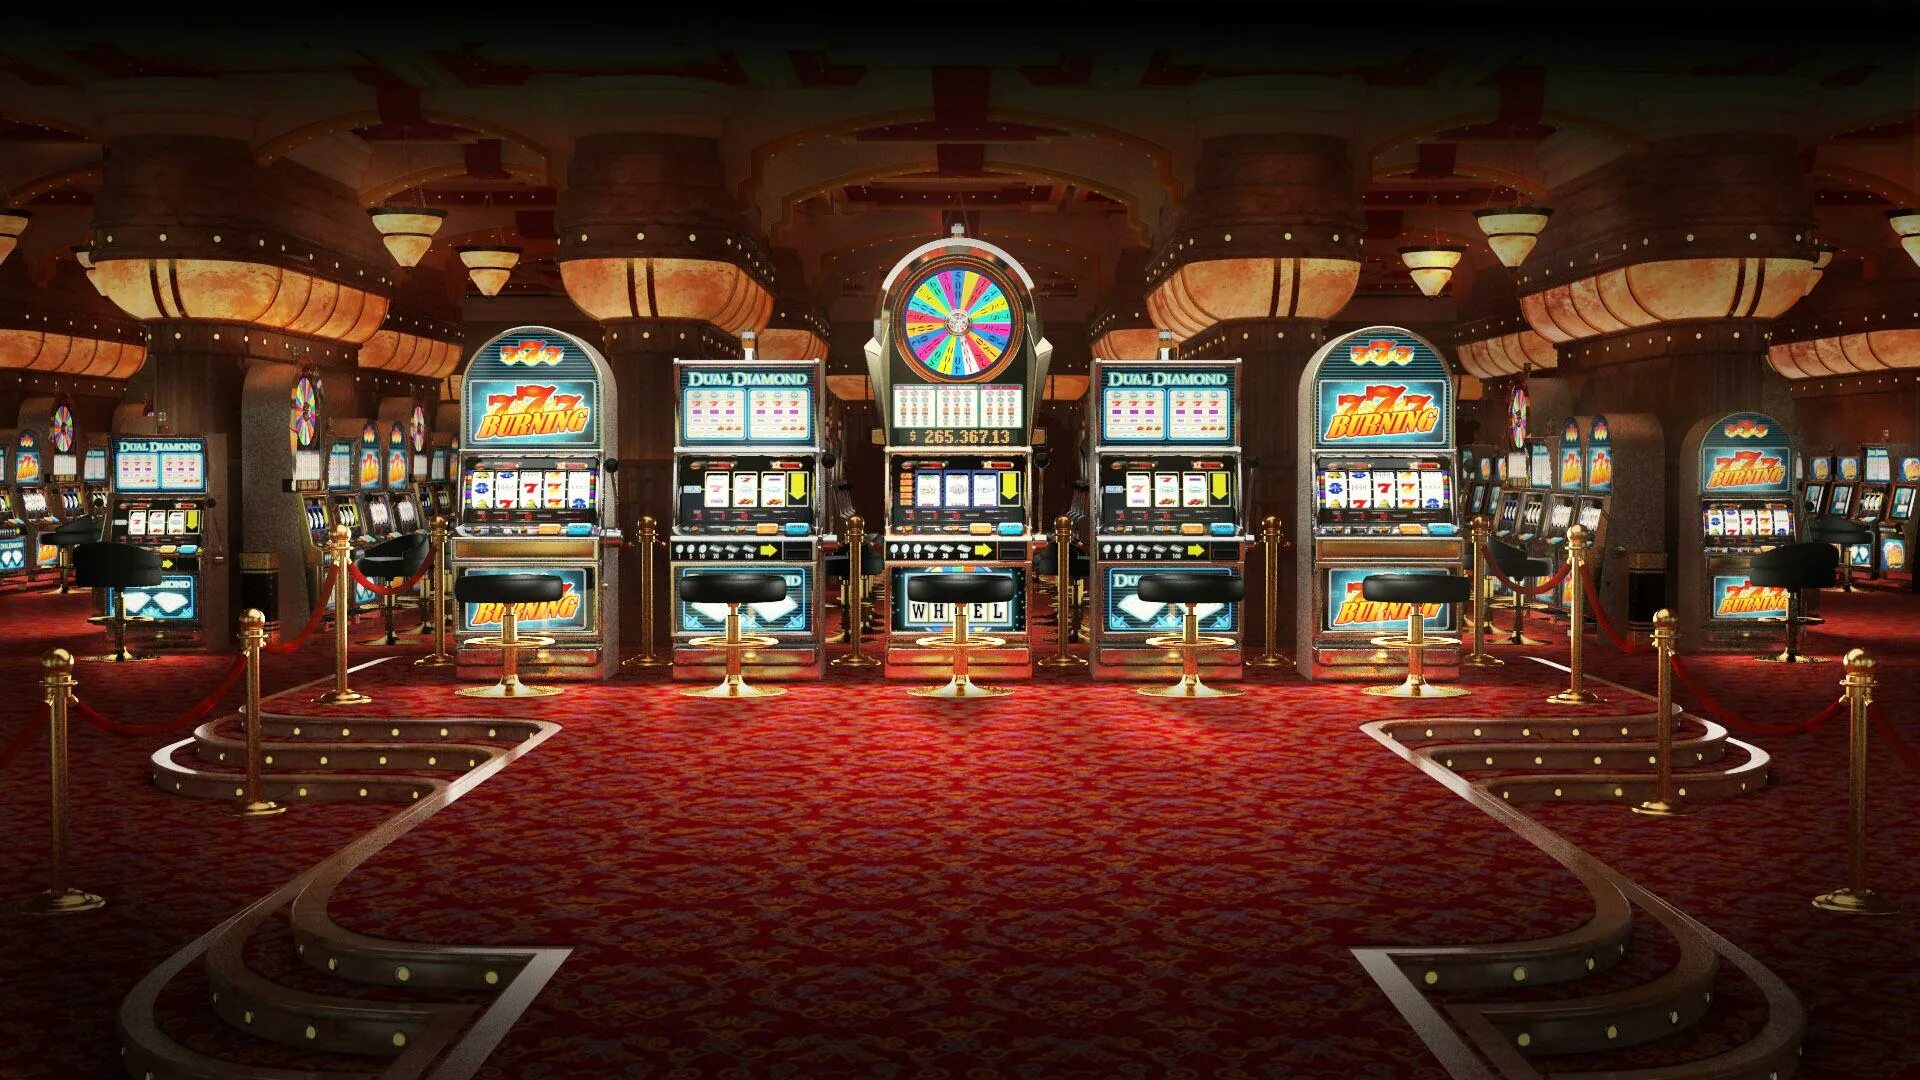 Luxury games. Зал казино. Казино фон. Комната с игровыми автоматами. Игровой зал казино.